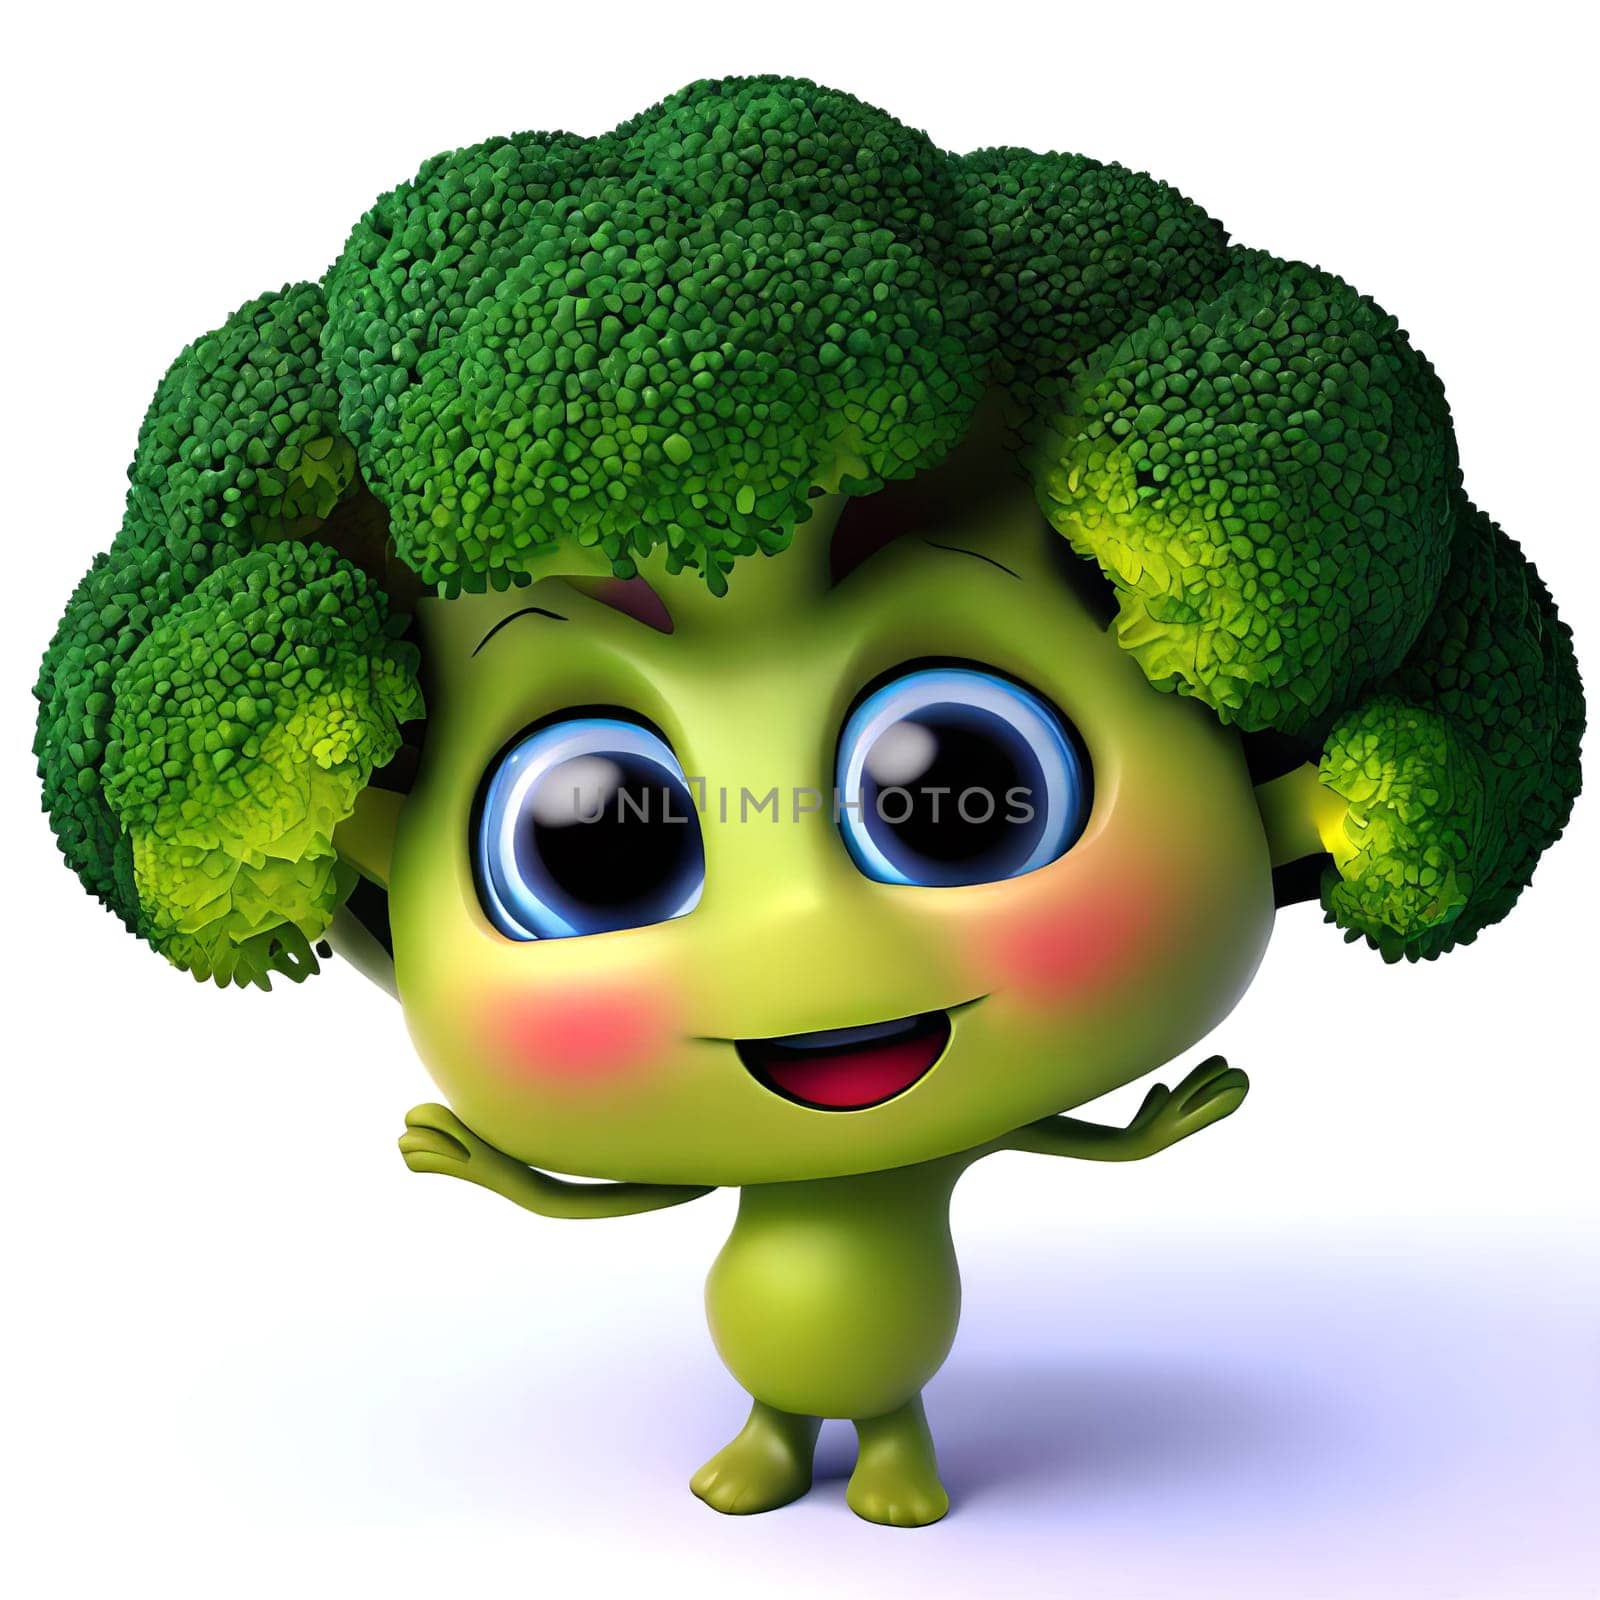 Cute cartoon 3d character of smiling green ripe broccoli, digitally generated illustration